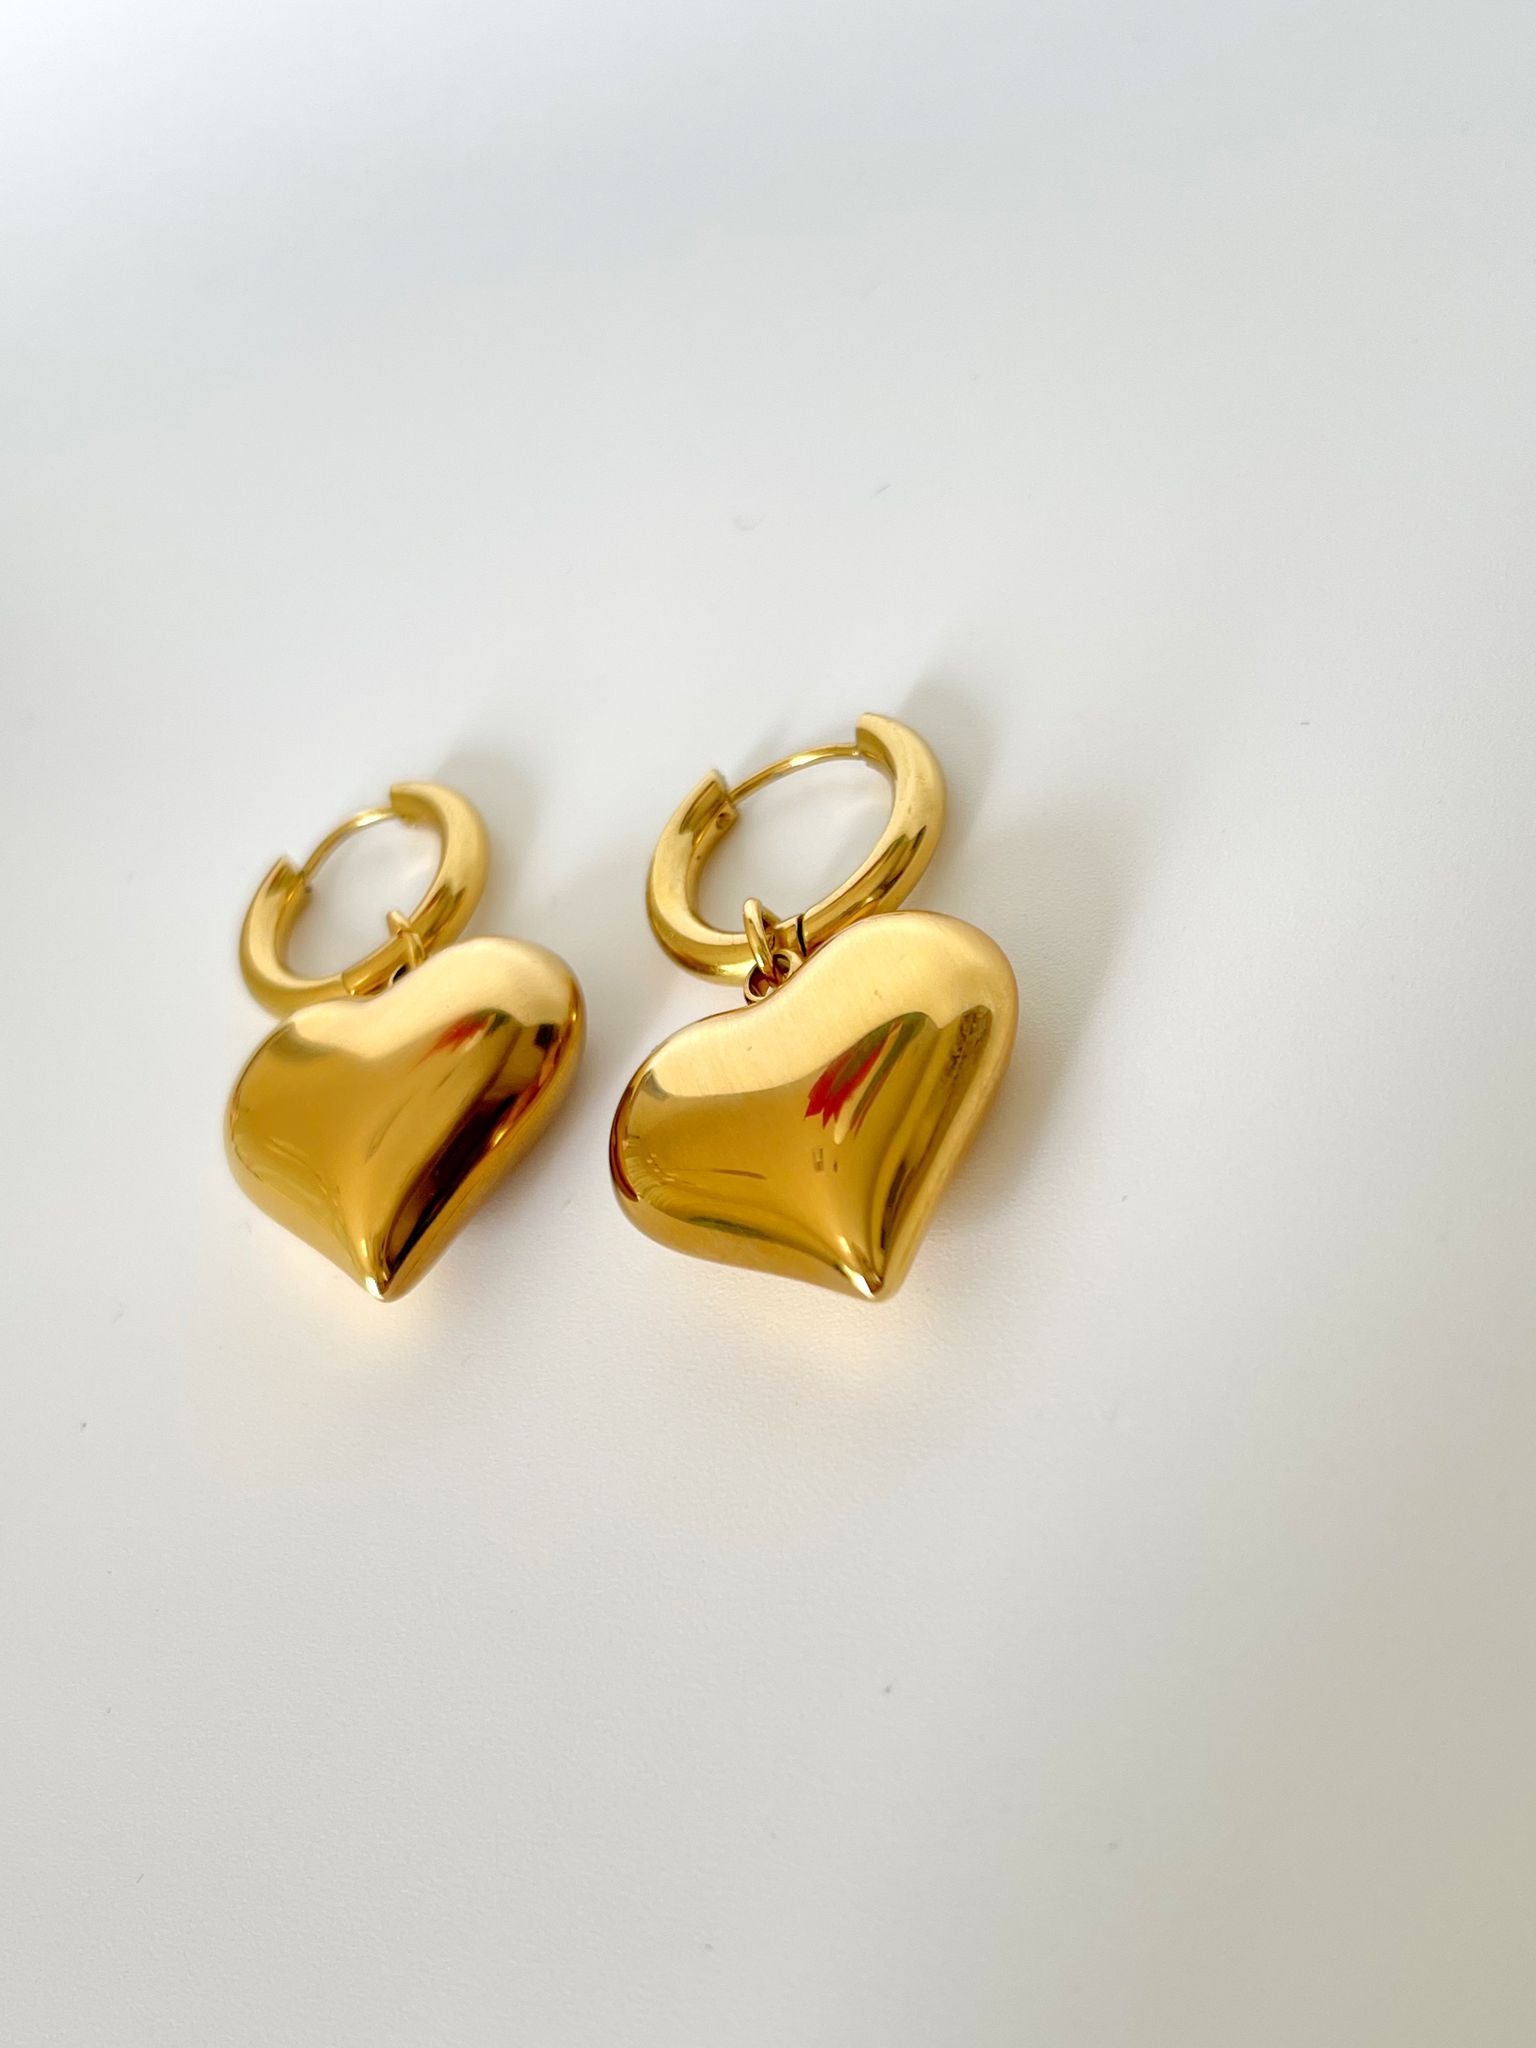 Queen of hearts GOLD earrings